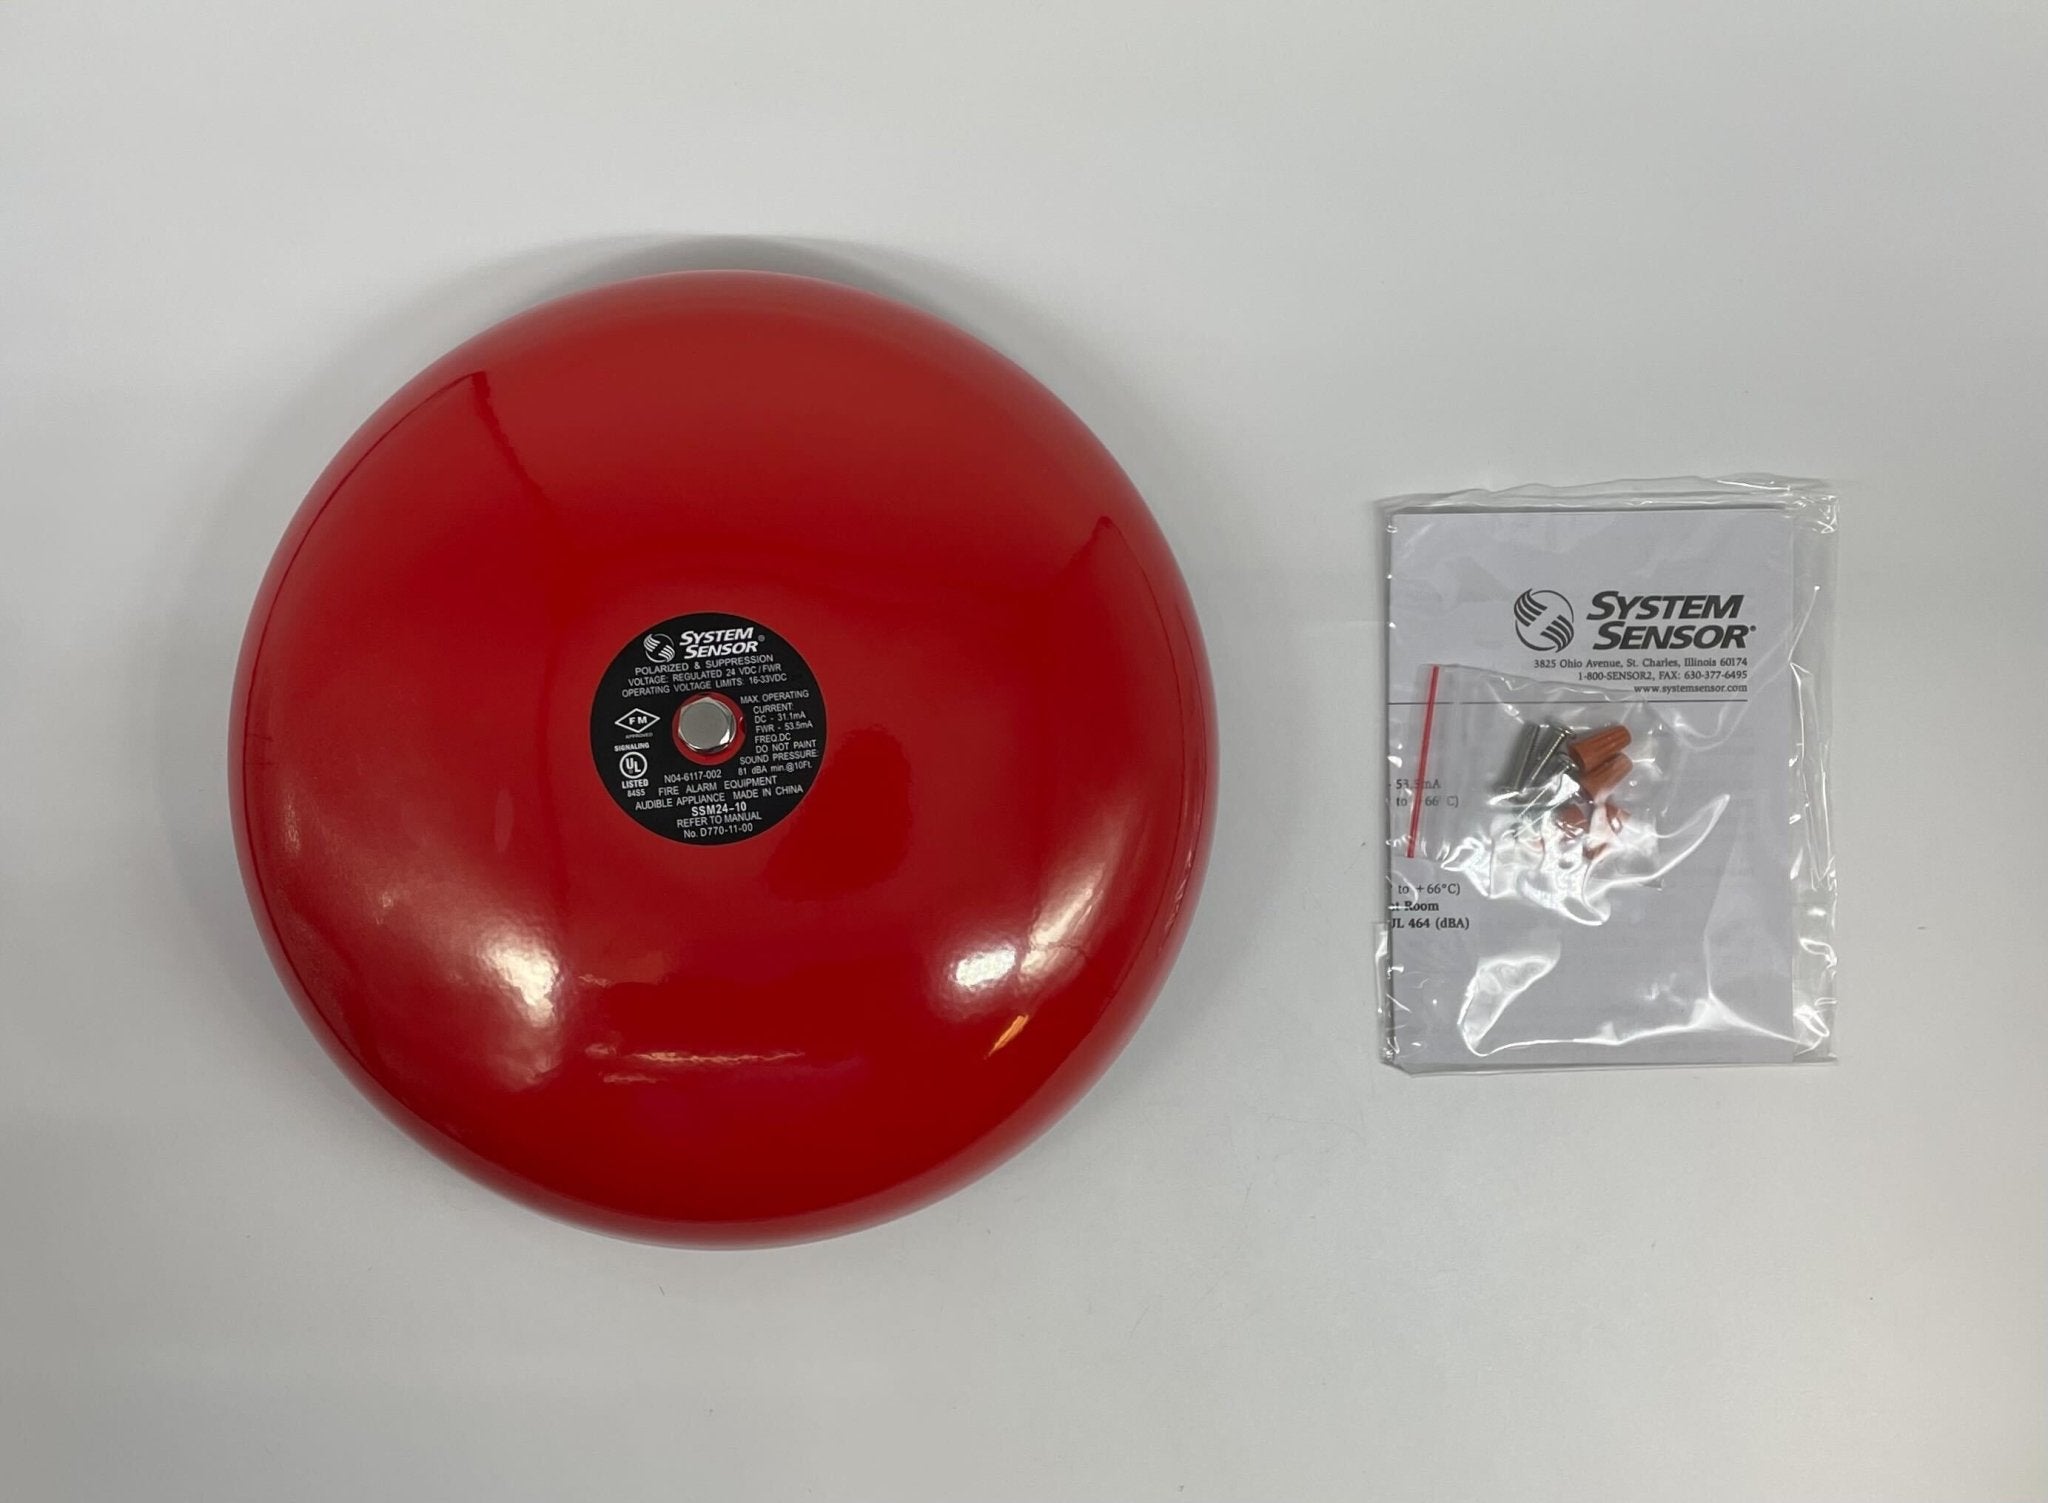 System Sensor SSM24-10 24 Volt Bell - The Fire Alarm Supplier